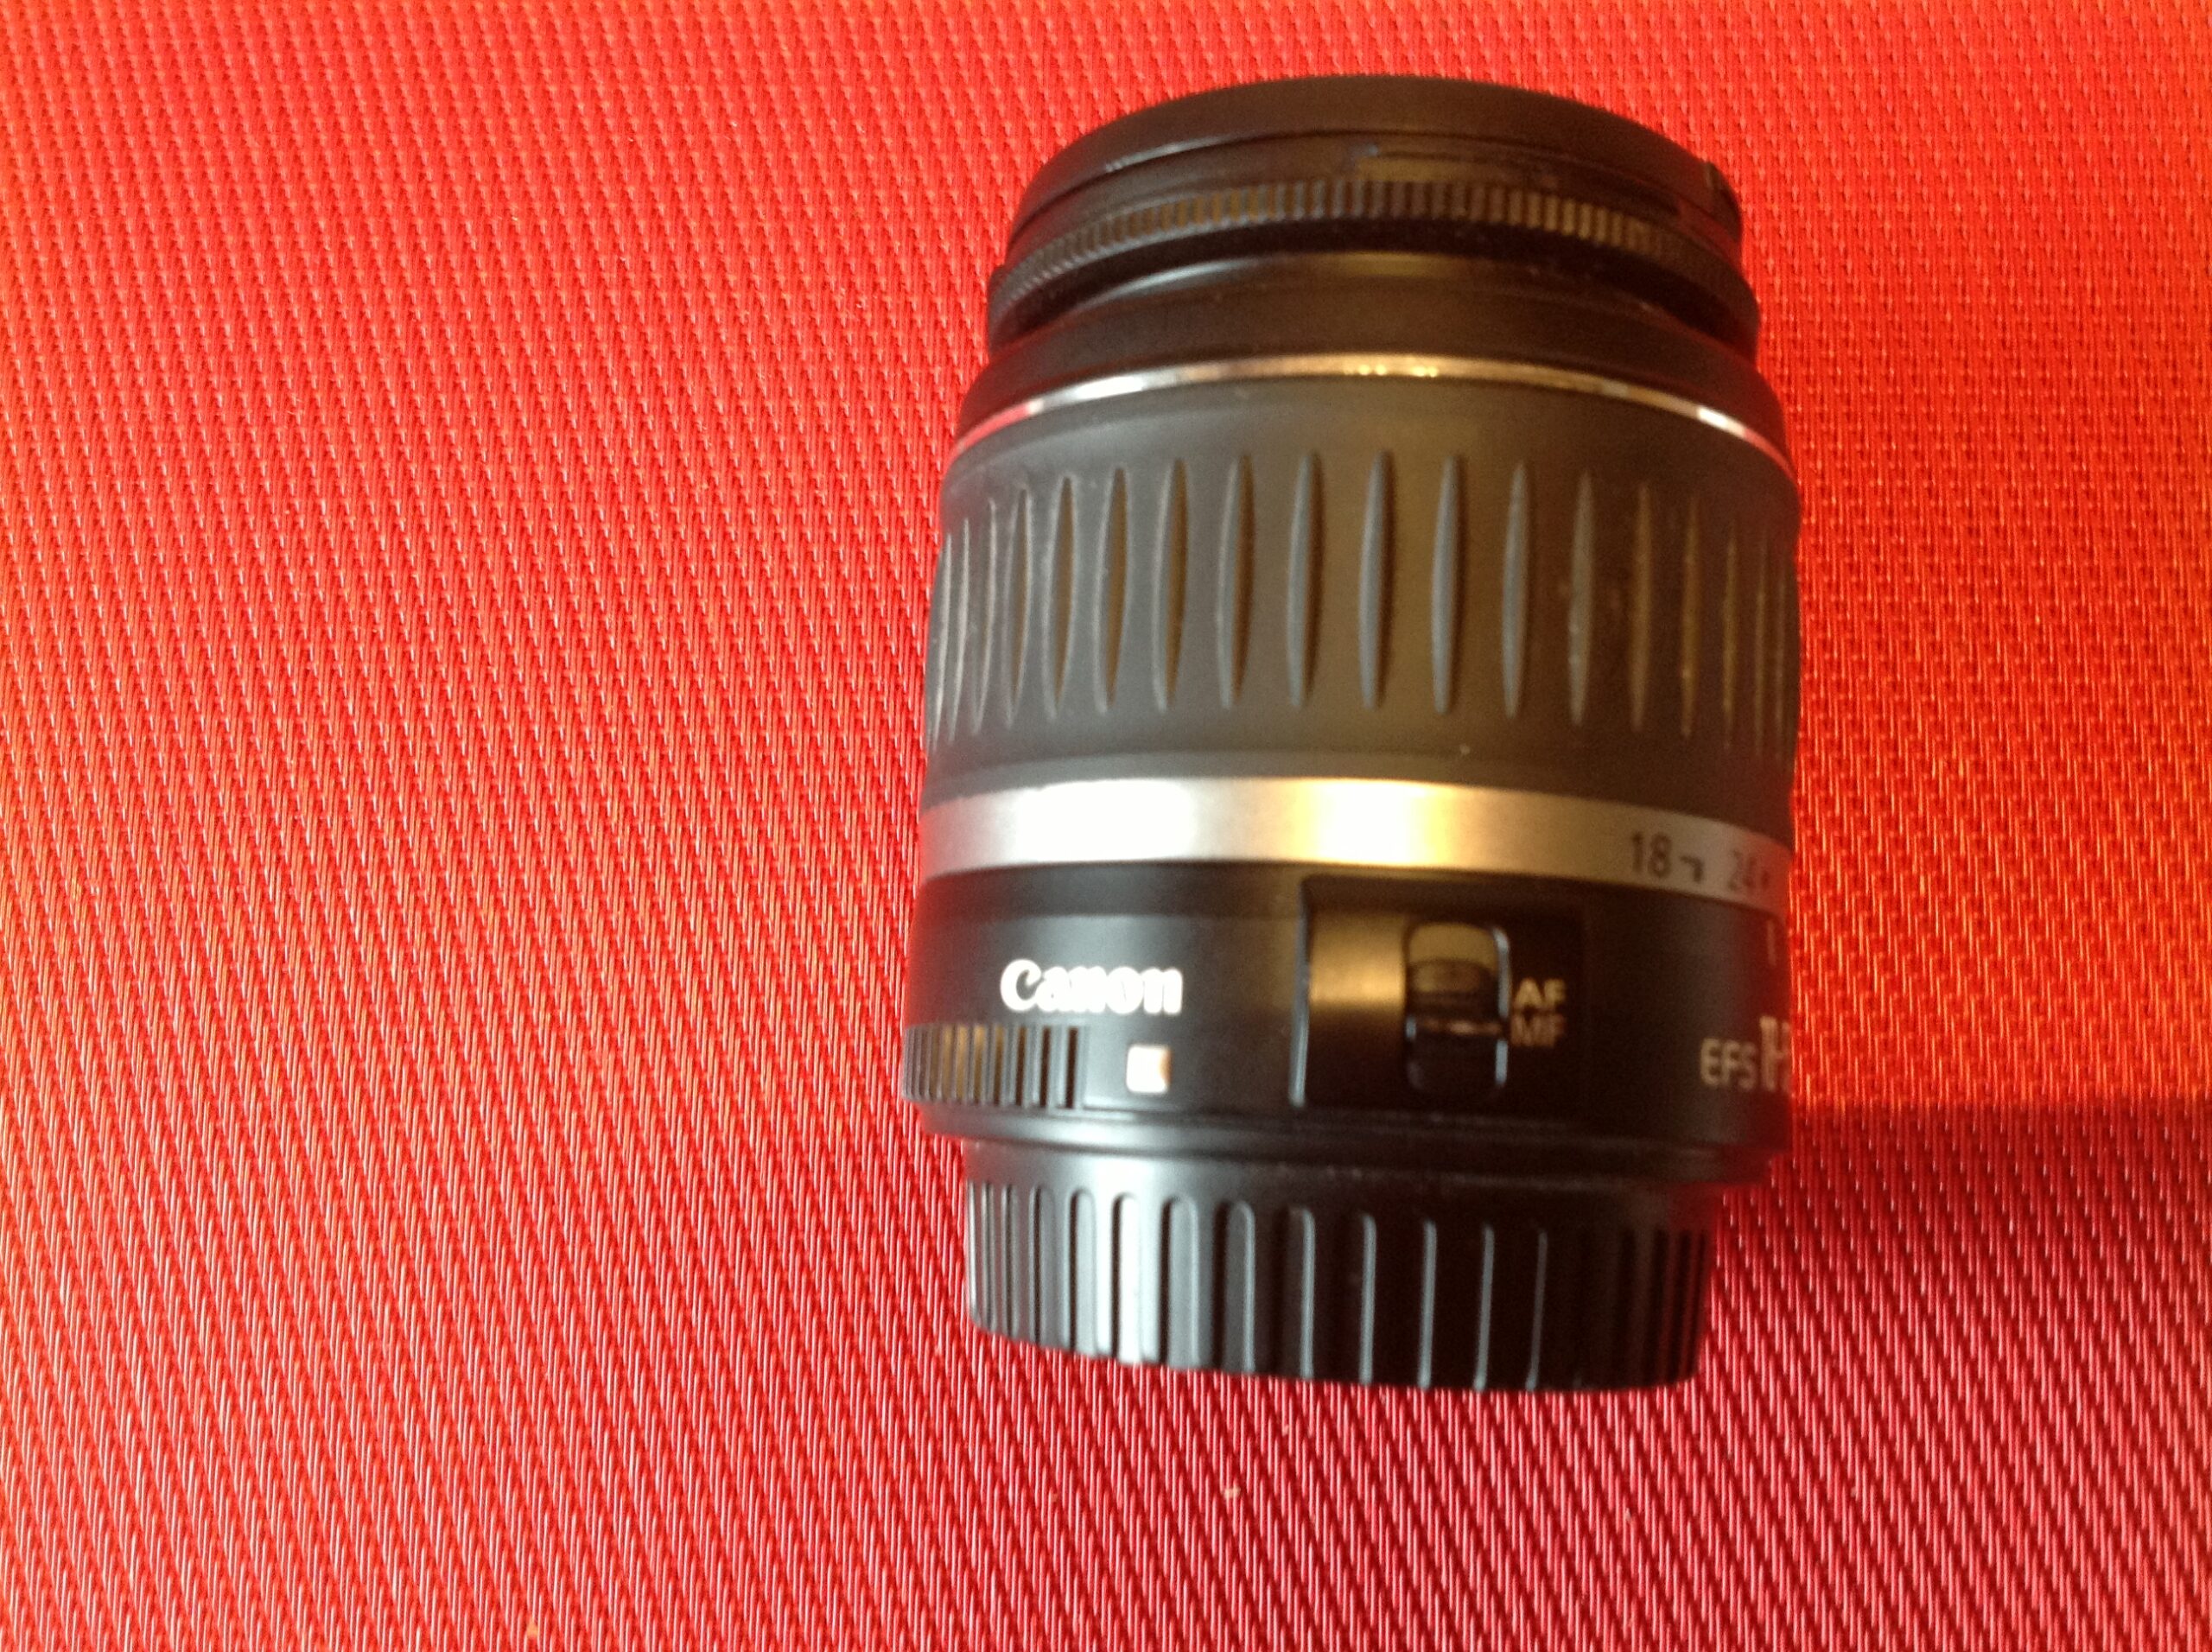 Canon Zoom Lens EF-S 18-55 mm 1:3.5-5.6 II 0.28m/0.9ft